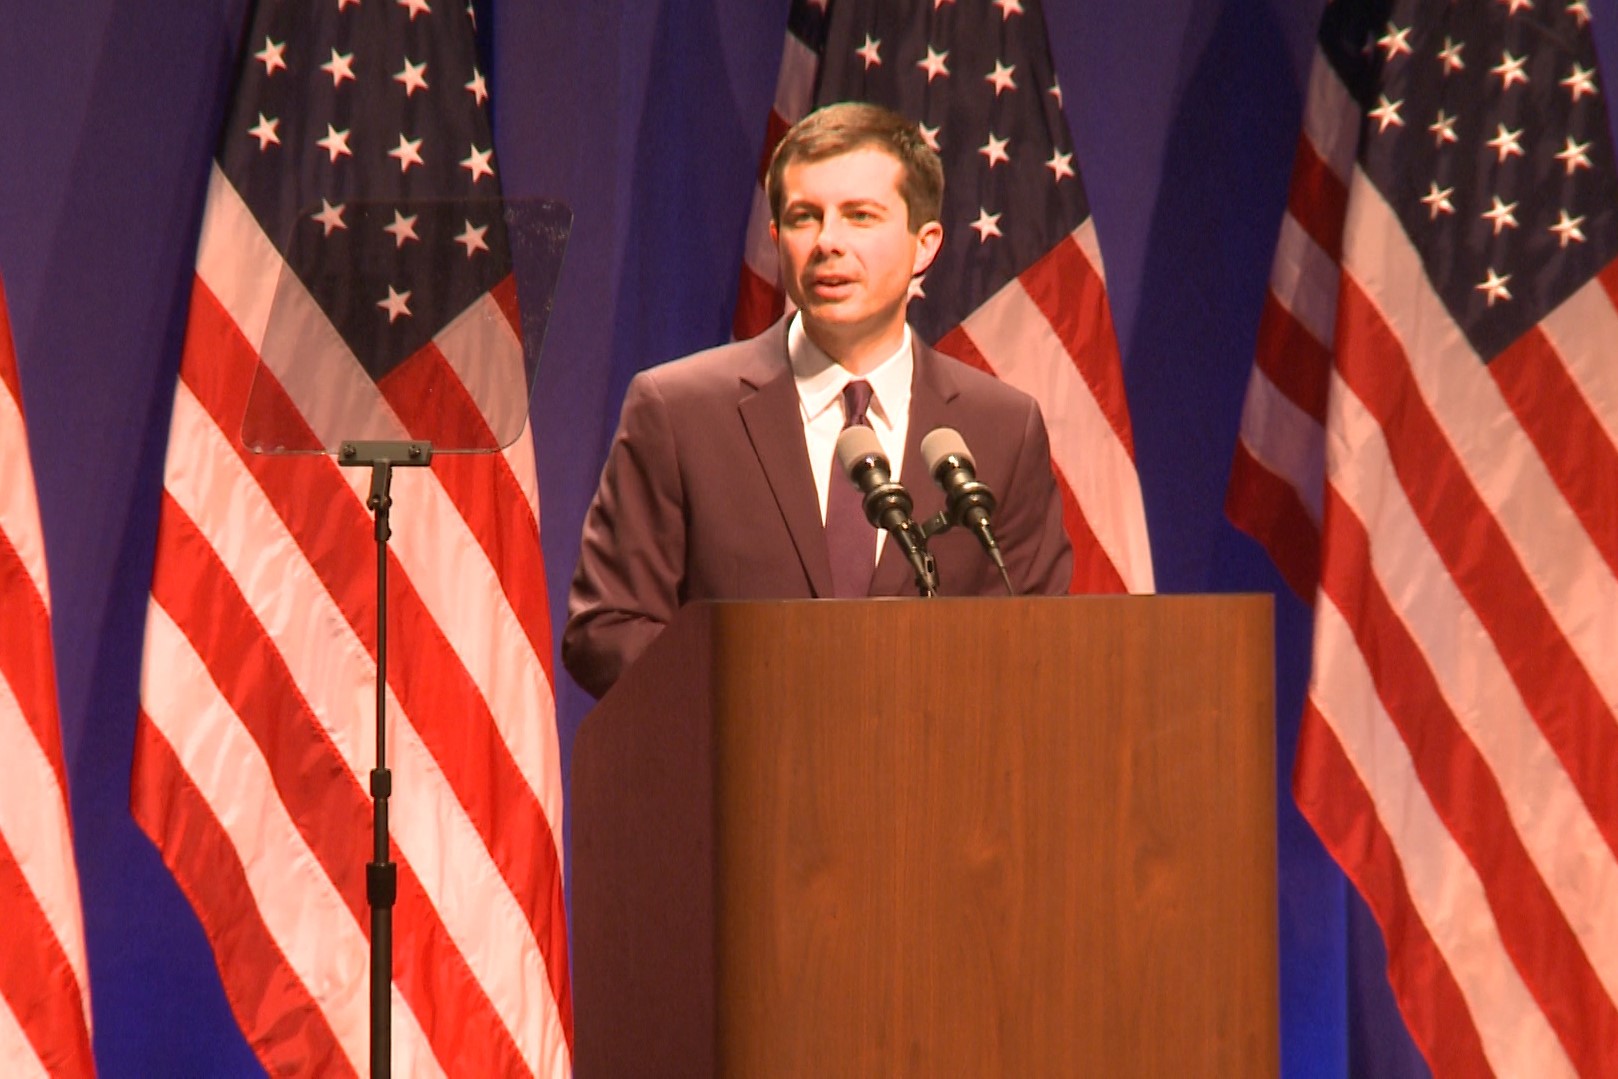 Presidential candidate Pete Buttigieg speaks at Indiana University Auditorium.